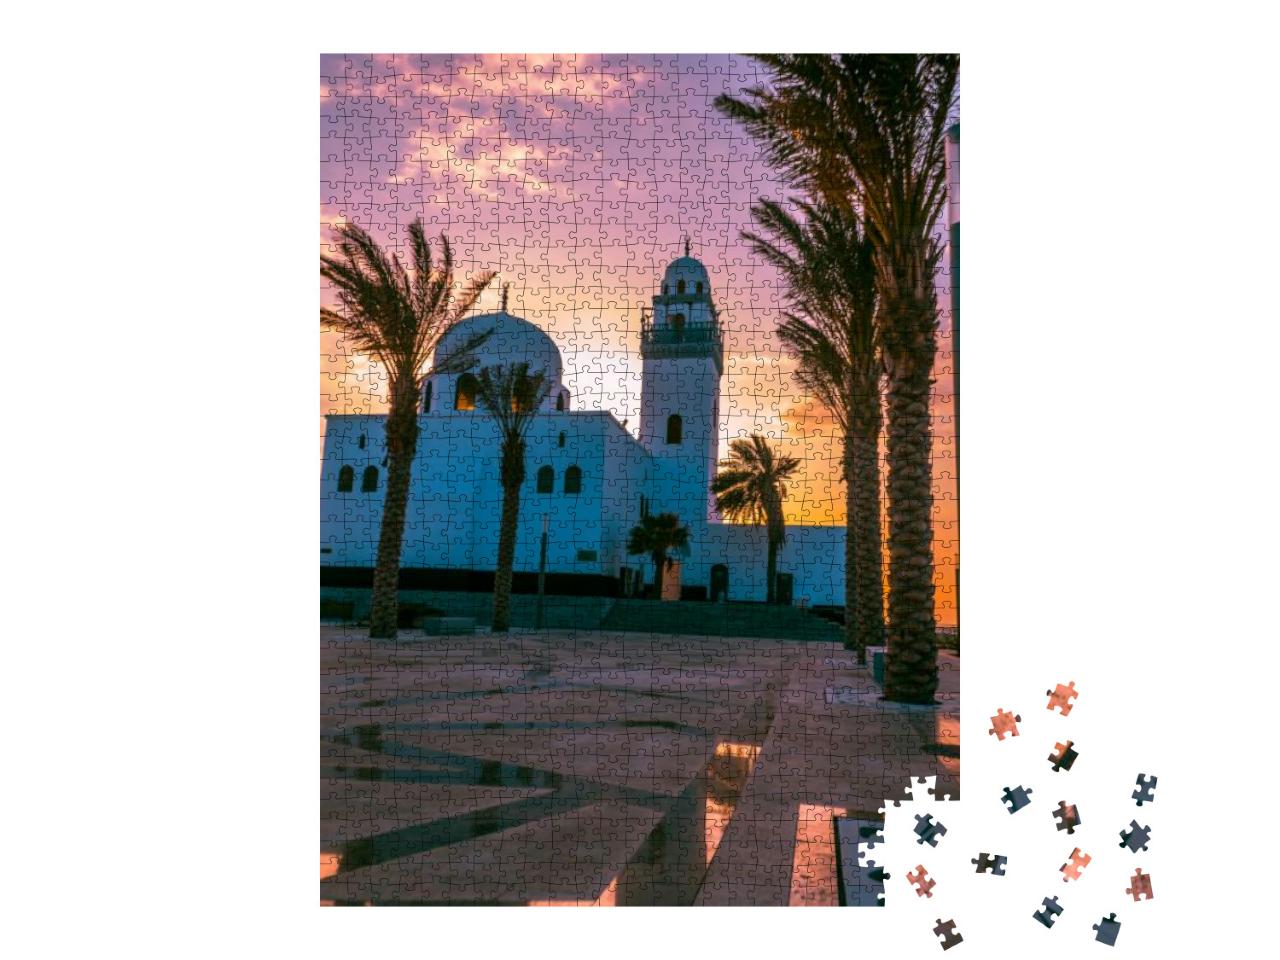 Island Mosque of Jeddah Corniche, Saudi Arabia... Jigsaw Puzzle with 1000 pieces